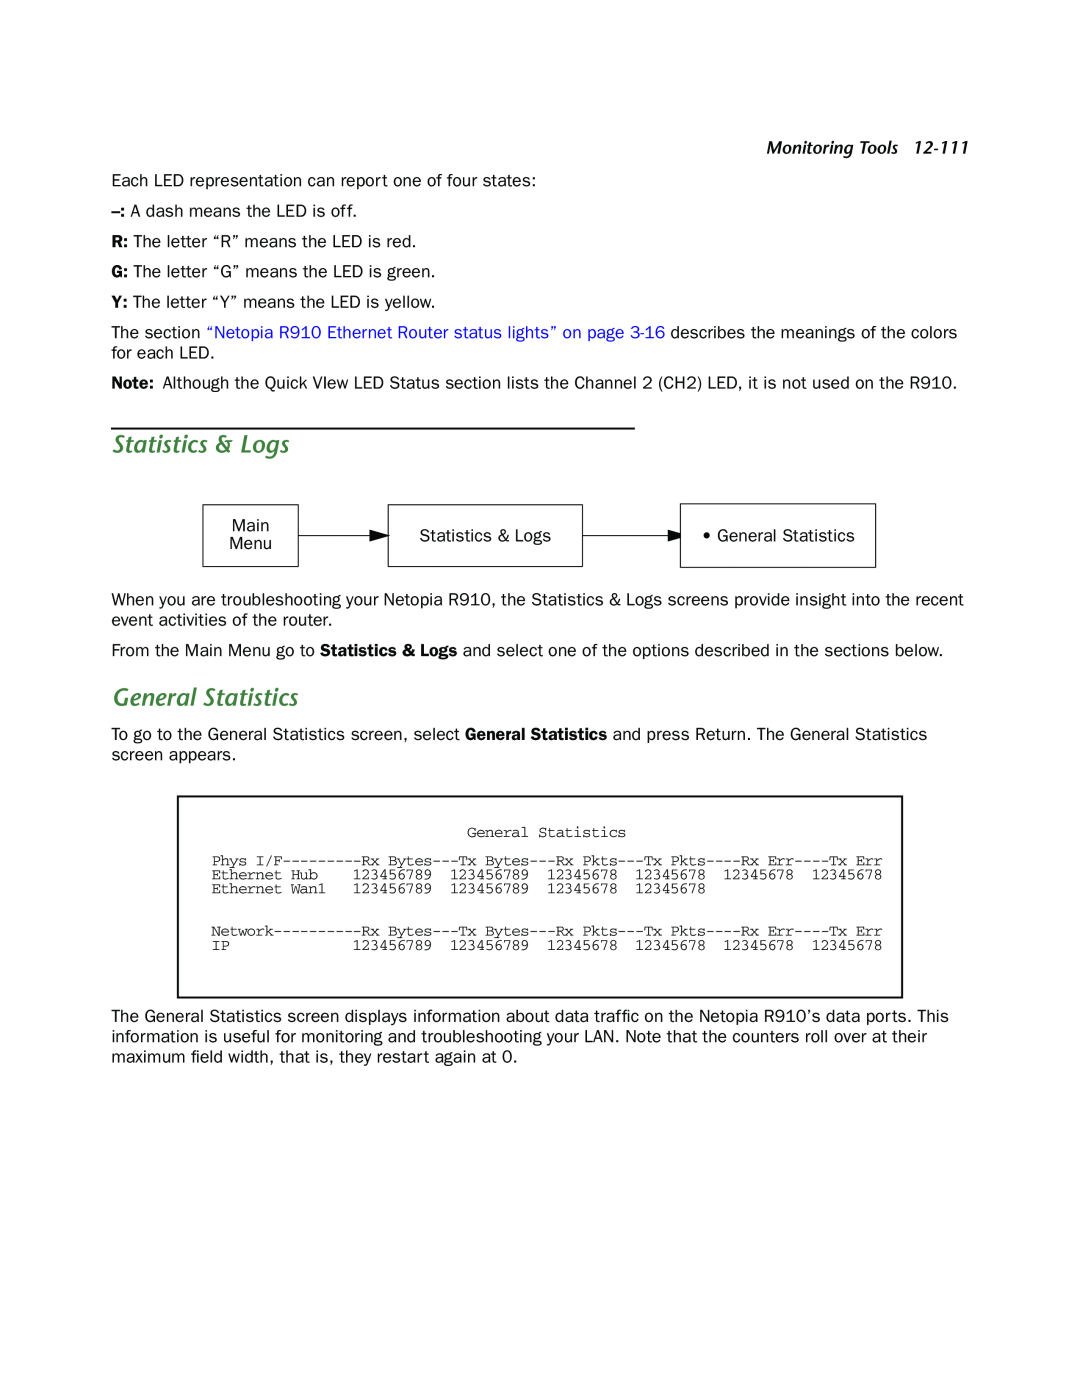 Netopia R910 manual Statistics & Logs, General Statistics, Monitoring Tools 